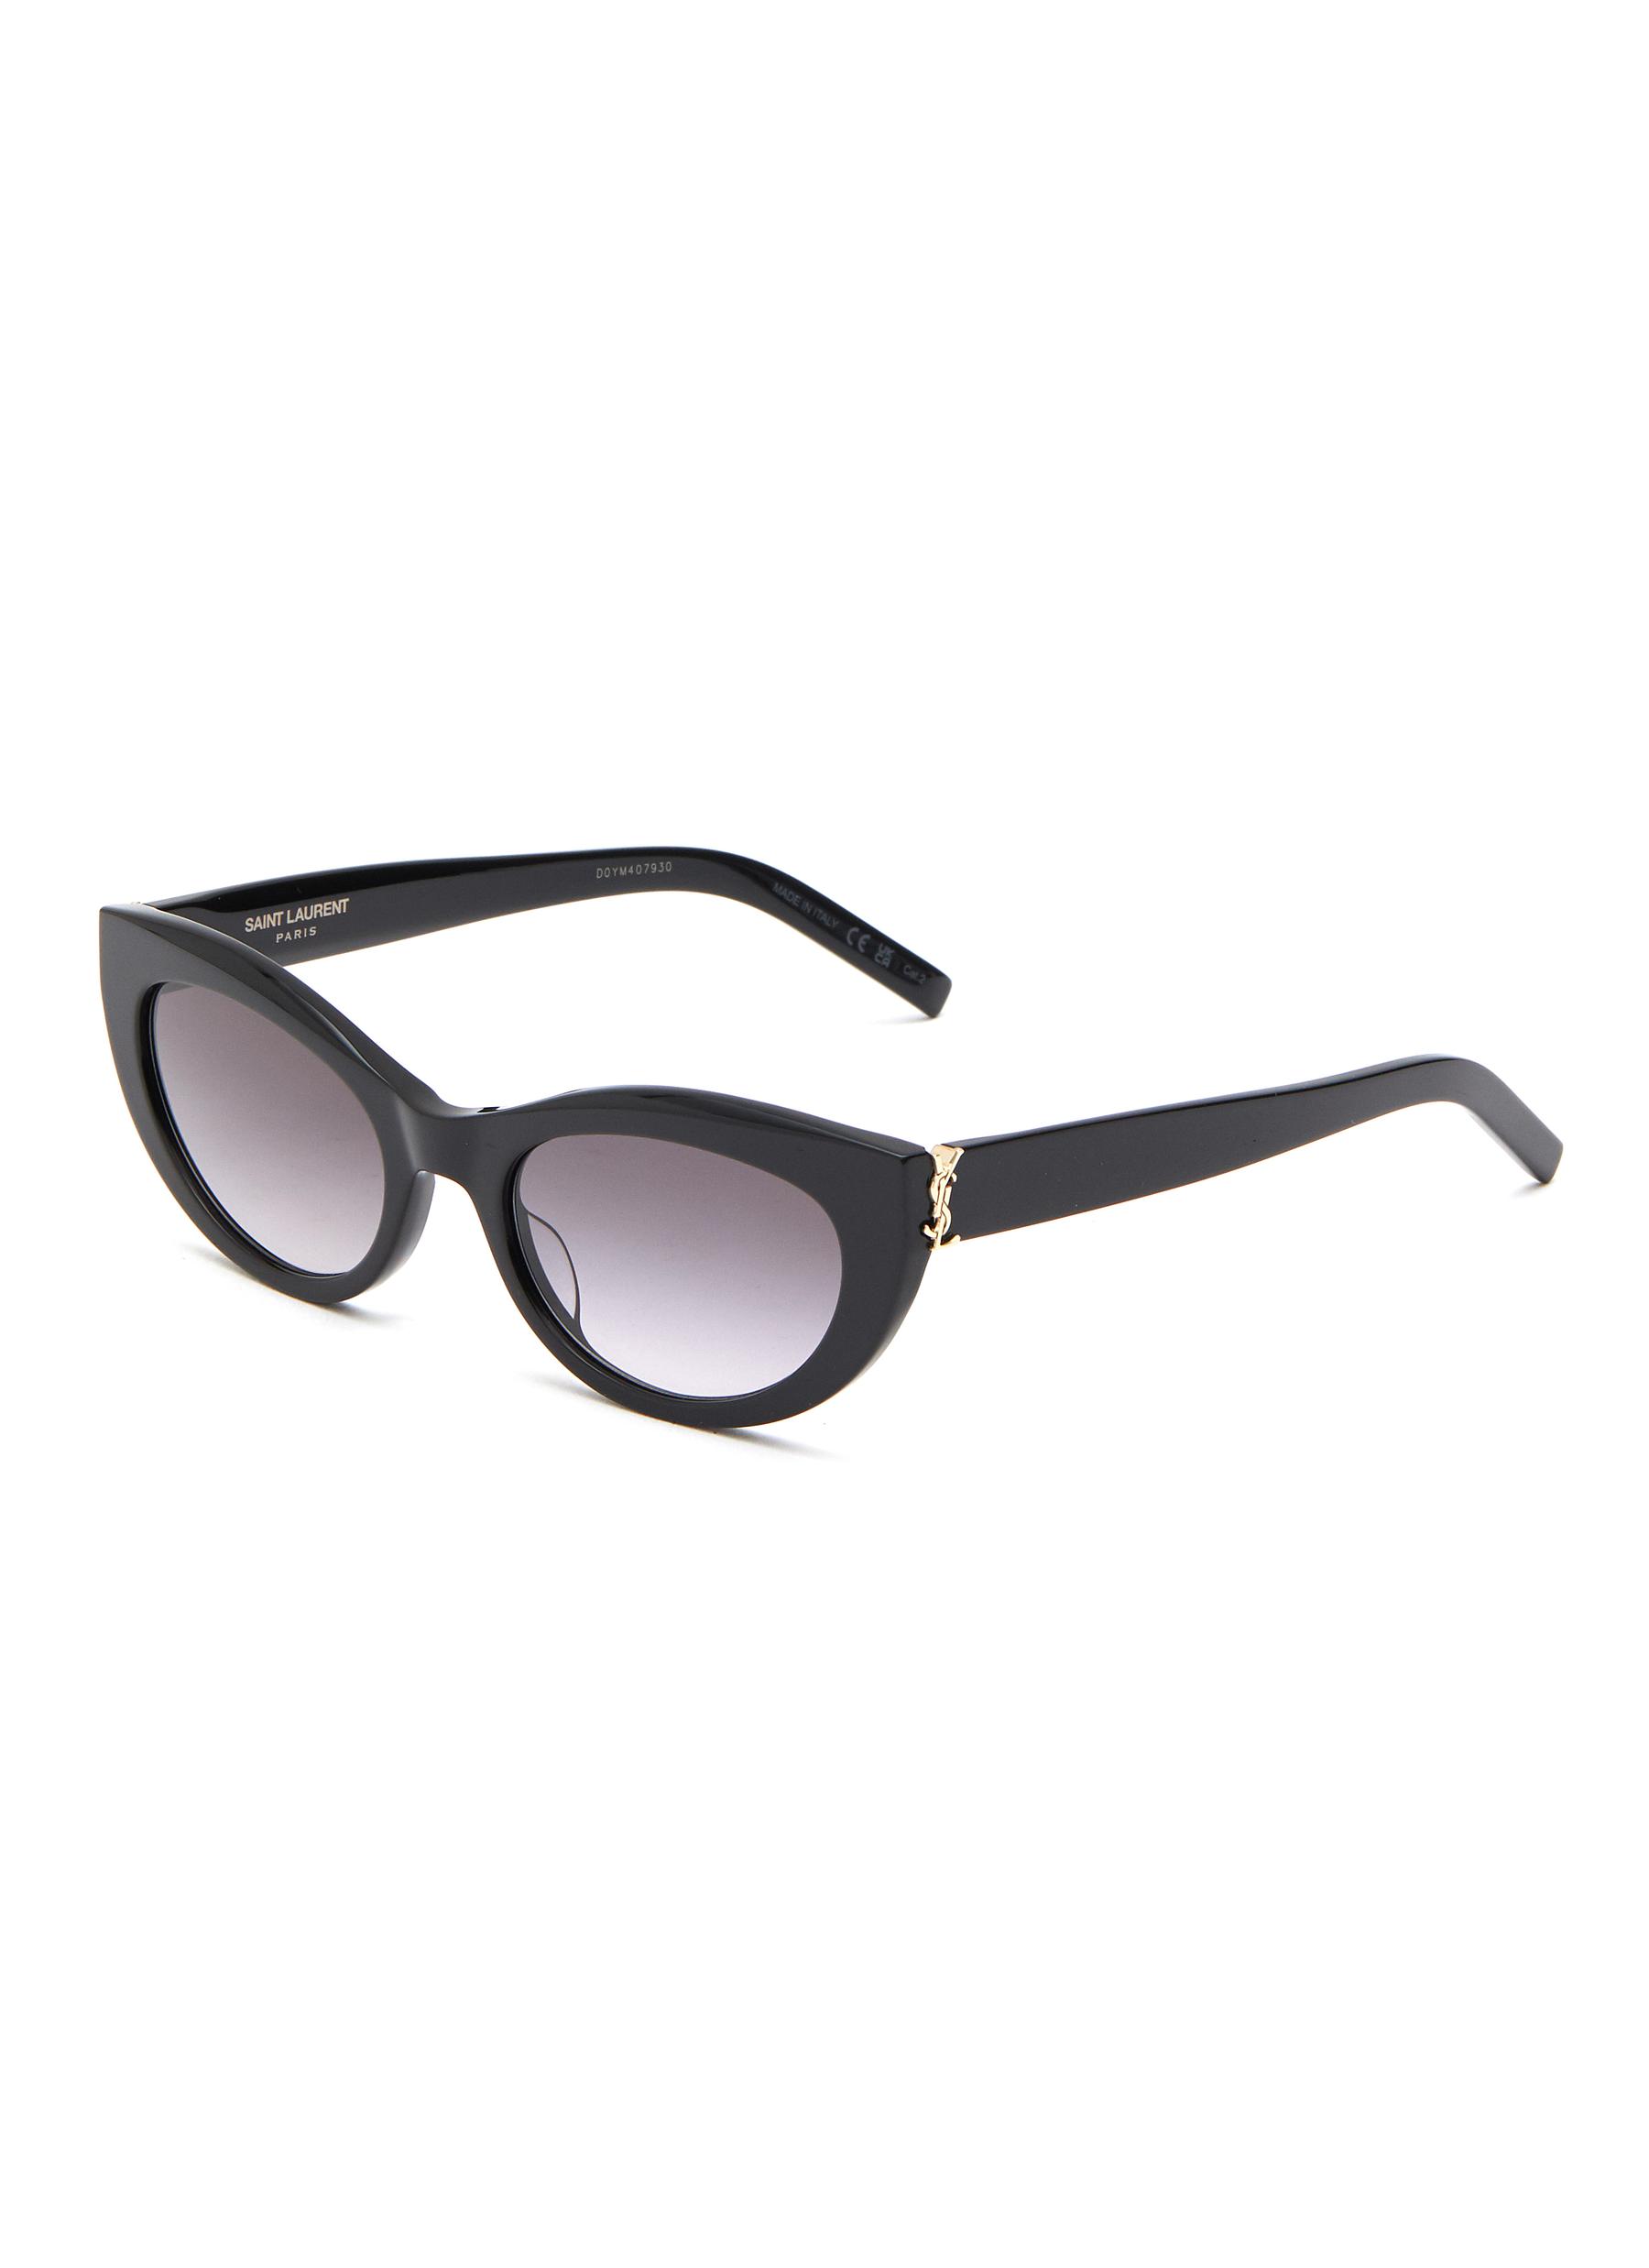 YSL Gold Rim Cat Eye Sunglasses